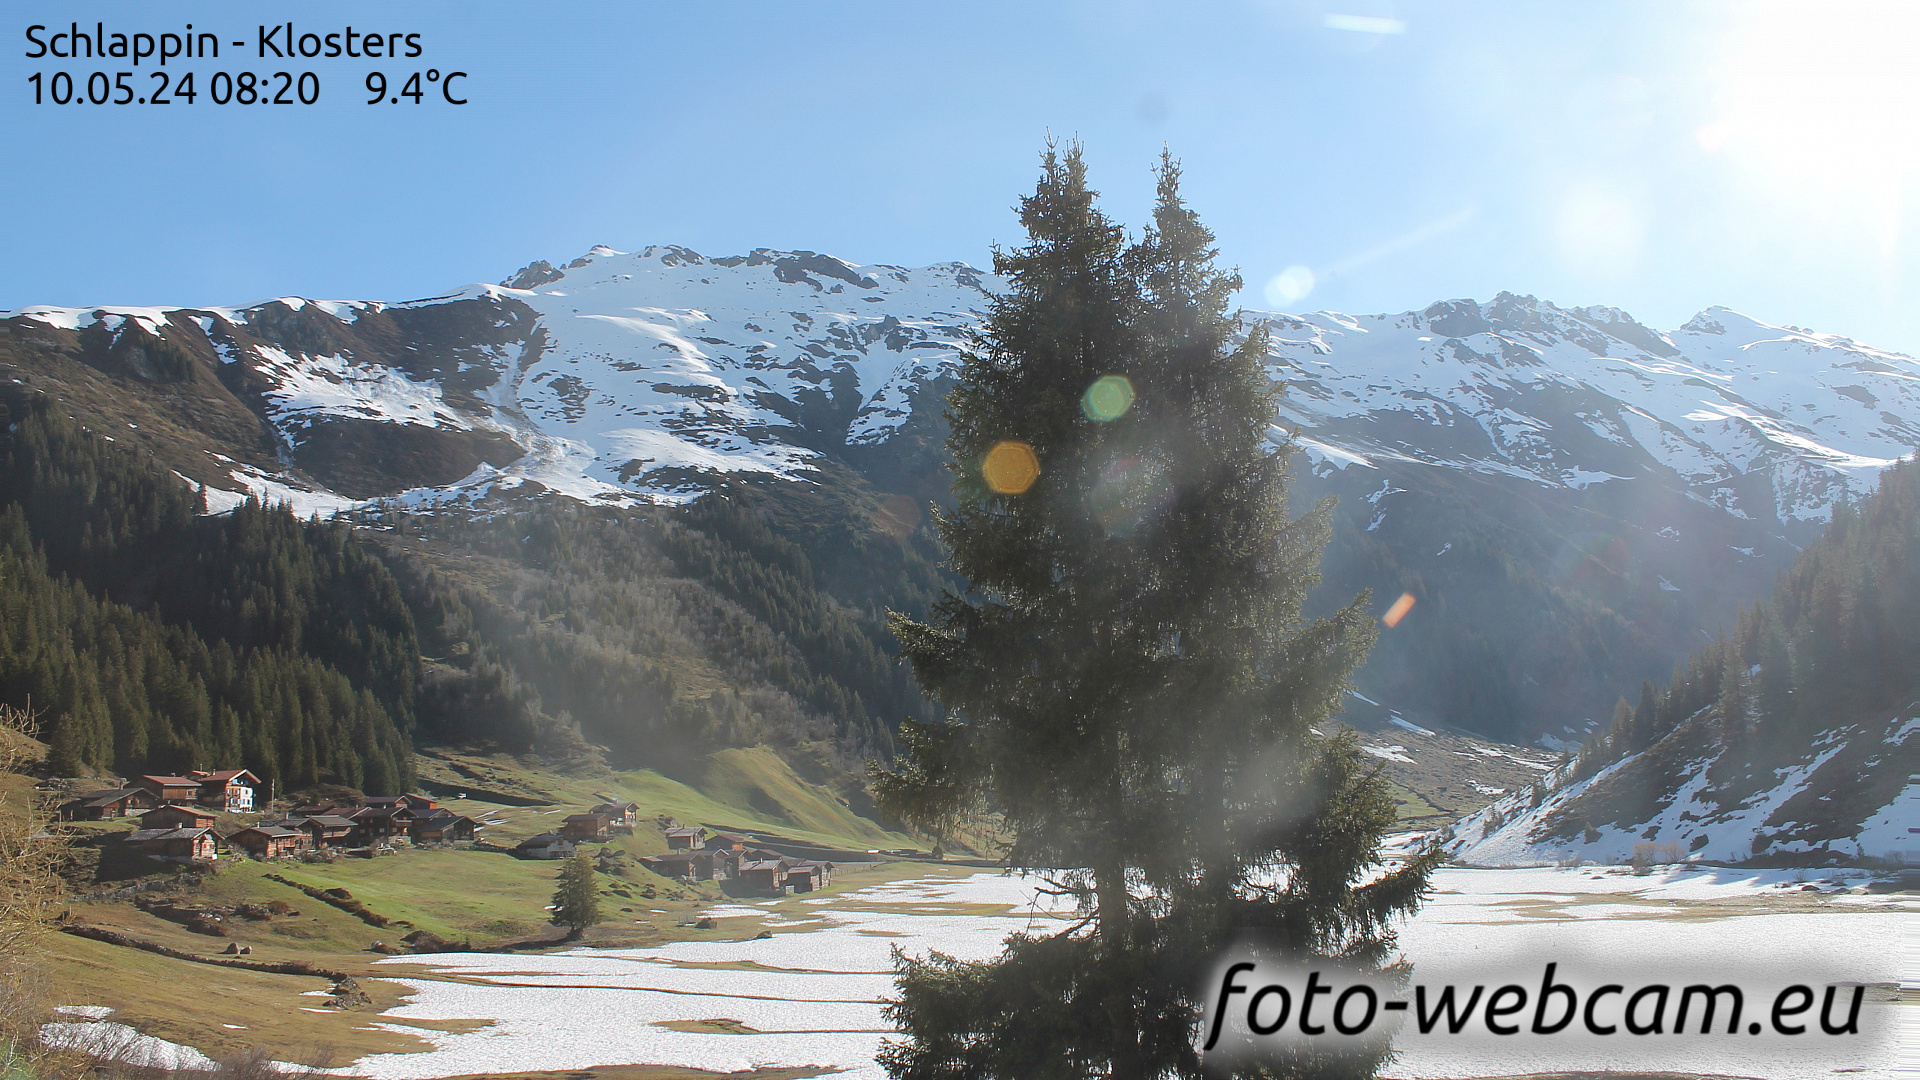 Klosters-Serneus Sab. 08:30